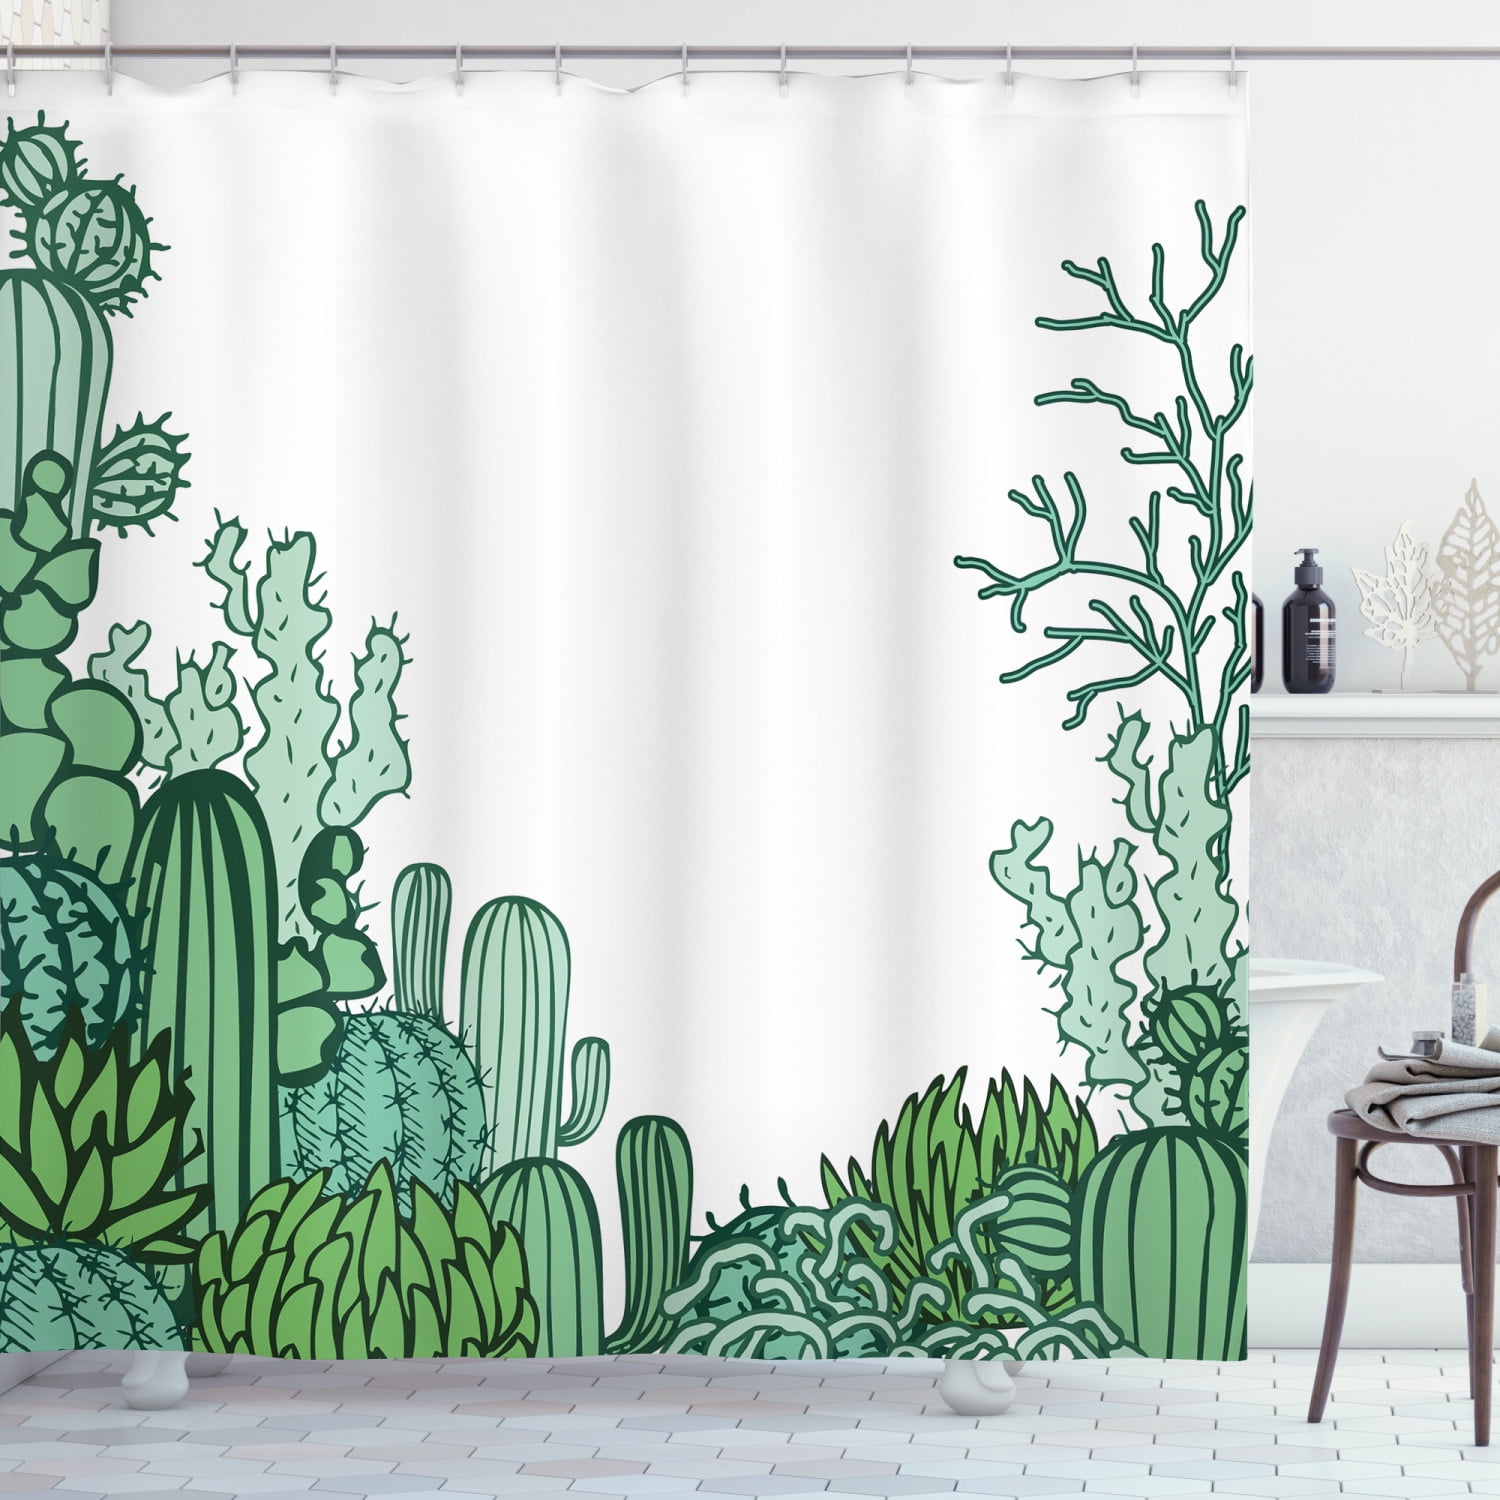 Details about   Cactus Wreath Shower Curtain Bathroom Decor Fabric & 12hooks 71 Inch 